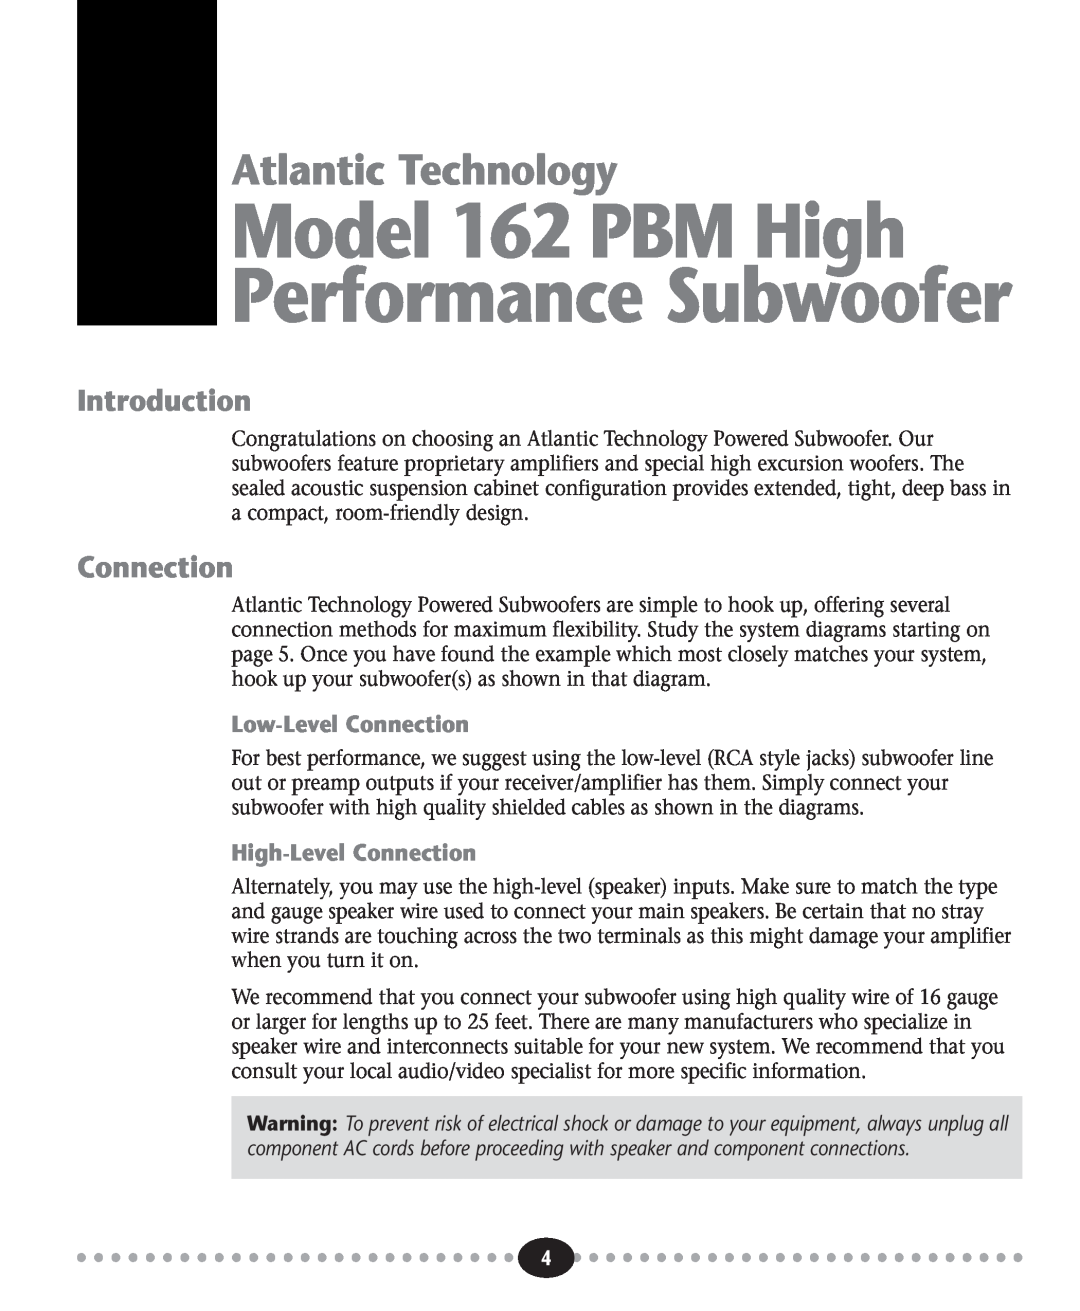 Atlantic Technology Introduction, Connection, Model 162 PBM High Performance Subwoofer, Atlantic Technology 